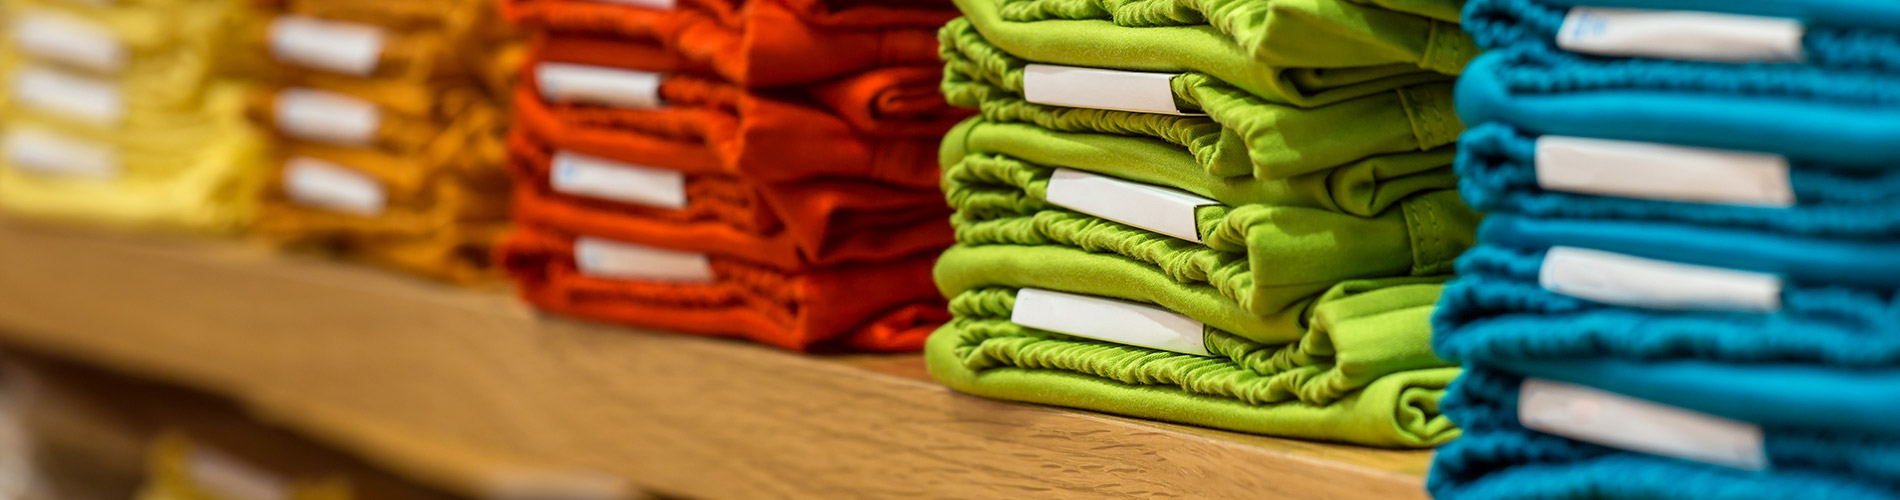 label-markets-retail-labels-clothes-folded-shirts-colors-table-dls